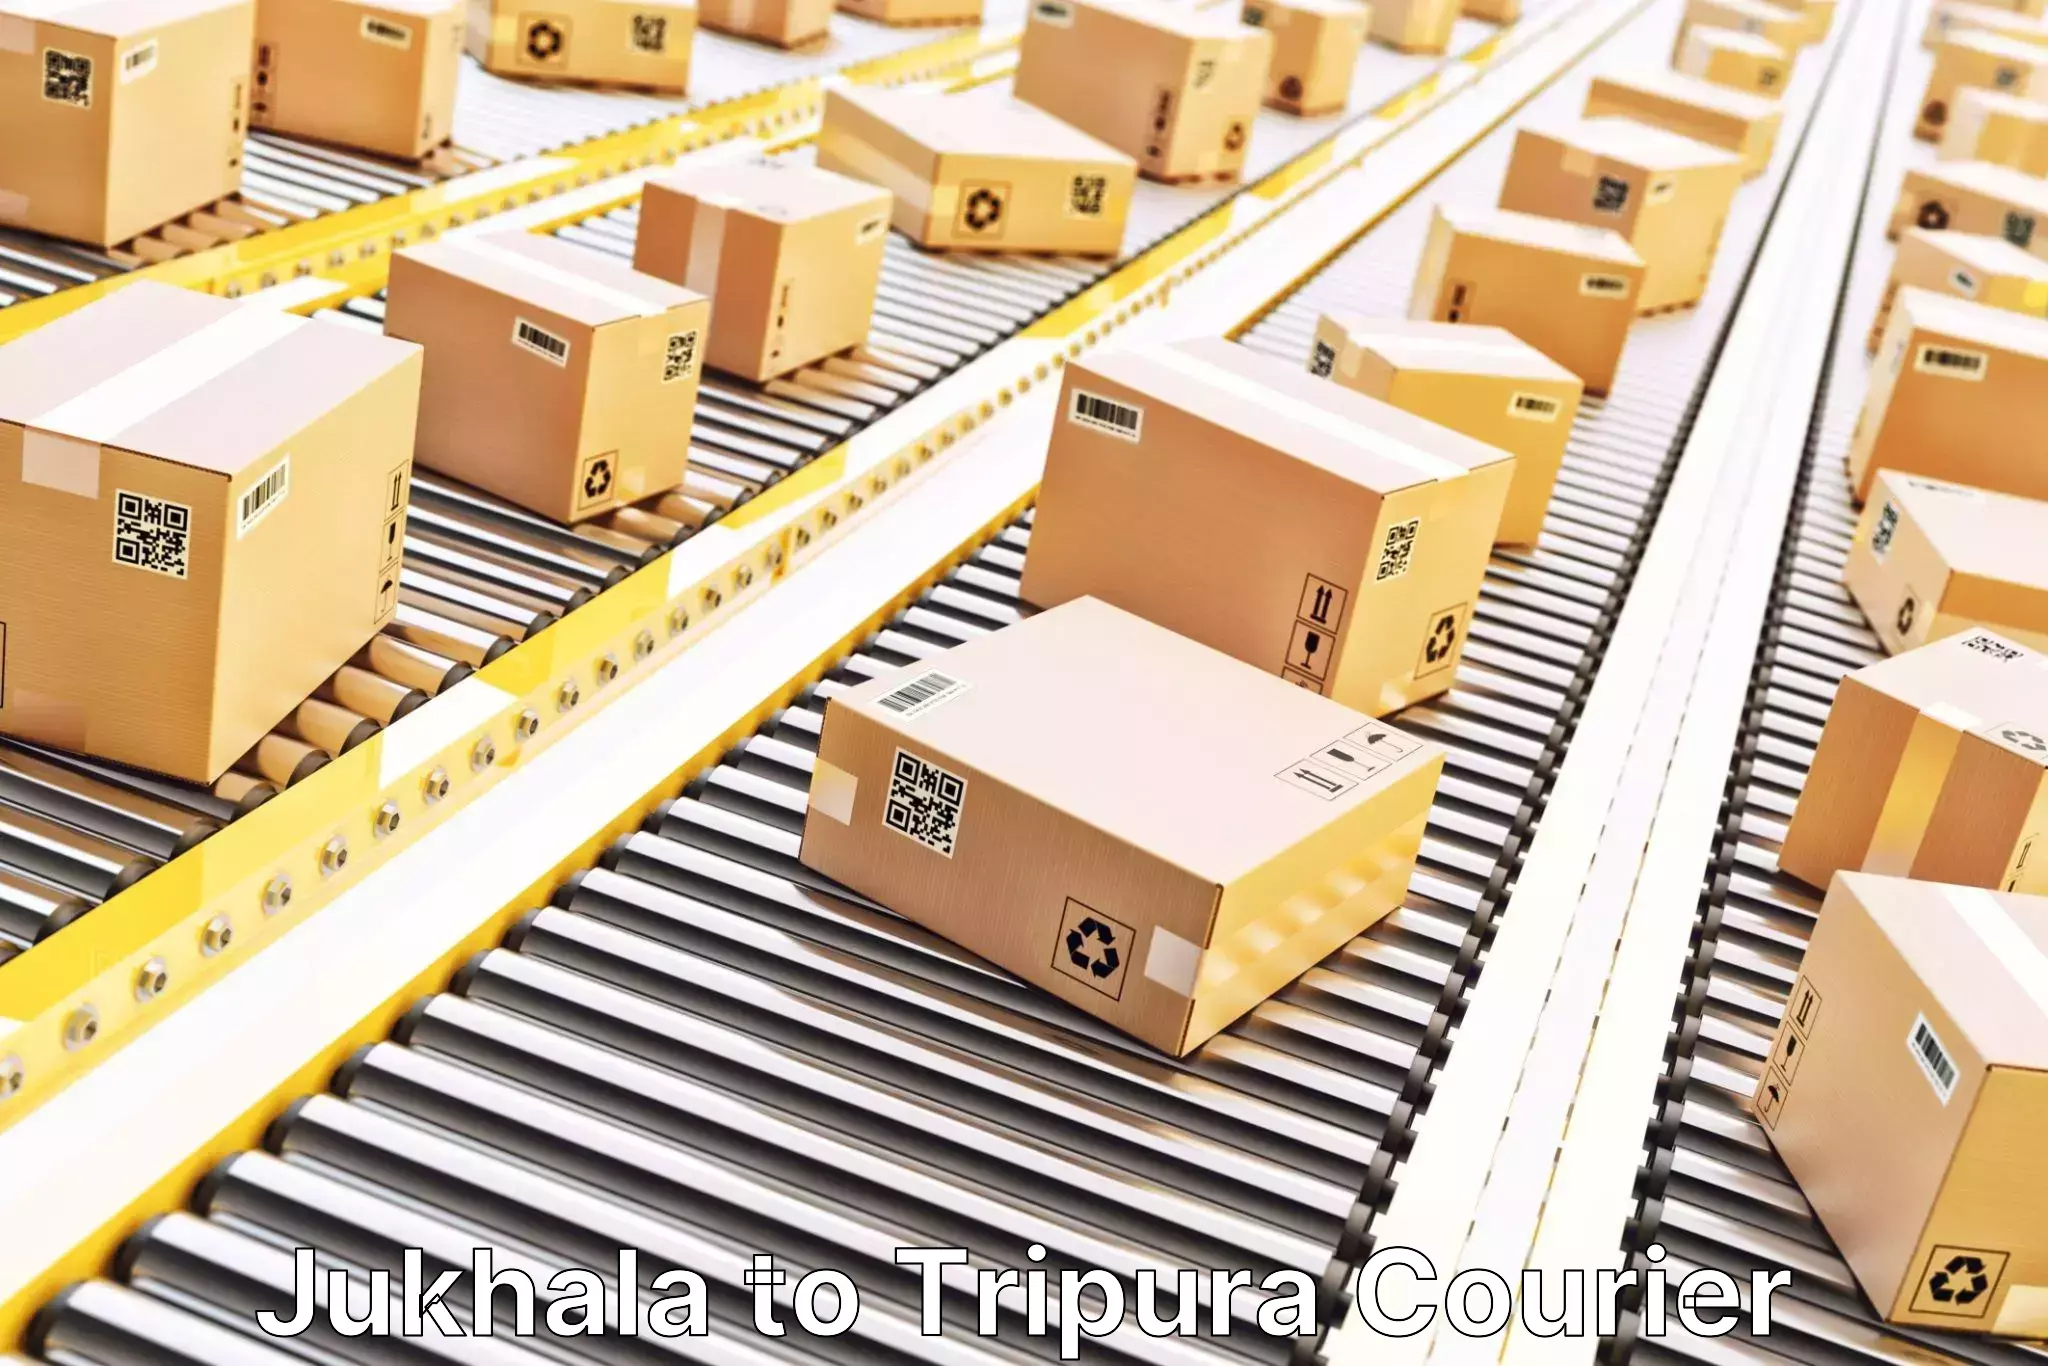 Supply chain efficiency Jukhala to Tripura